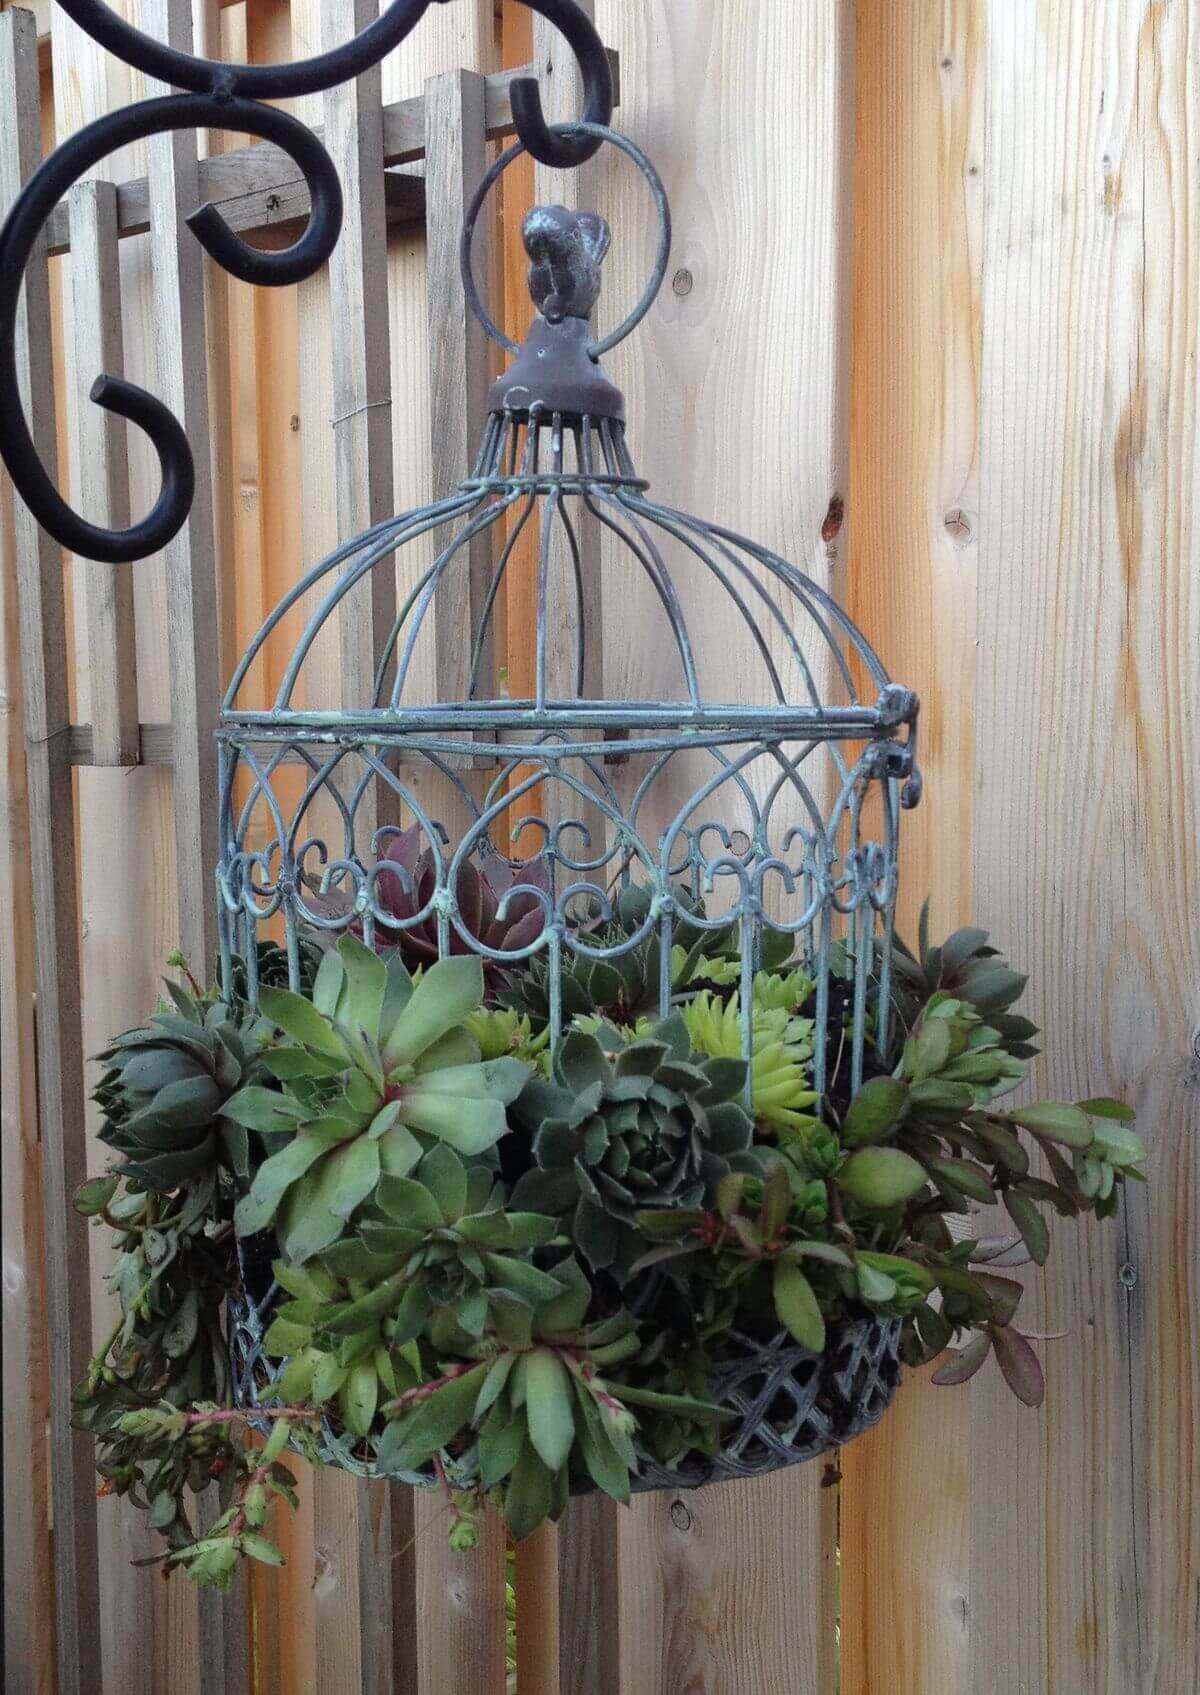 03 outdoor hanging planter ideas homebnc.jpg